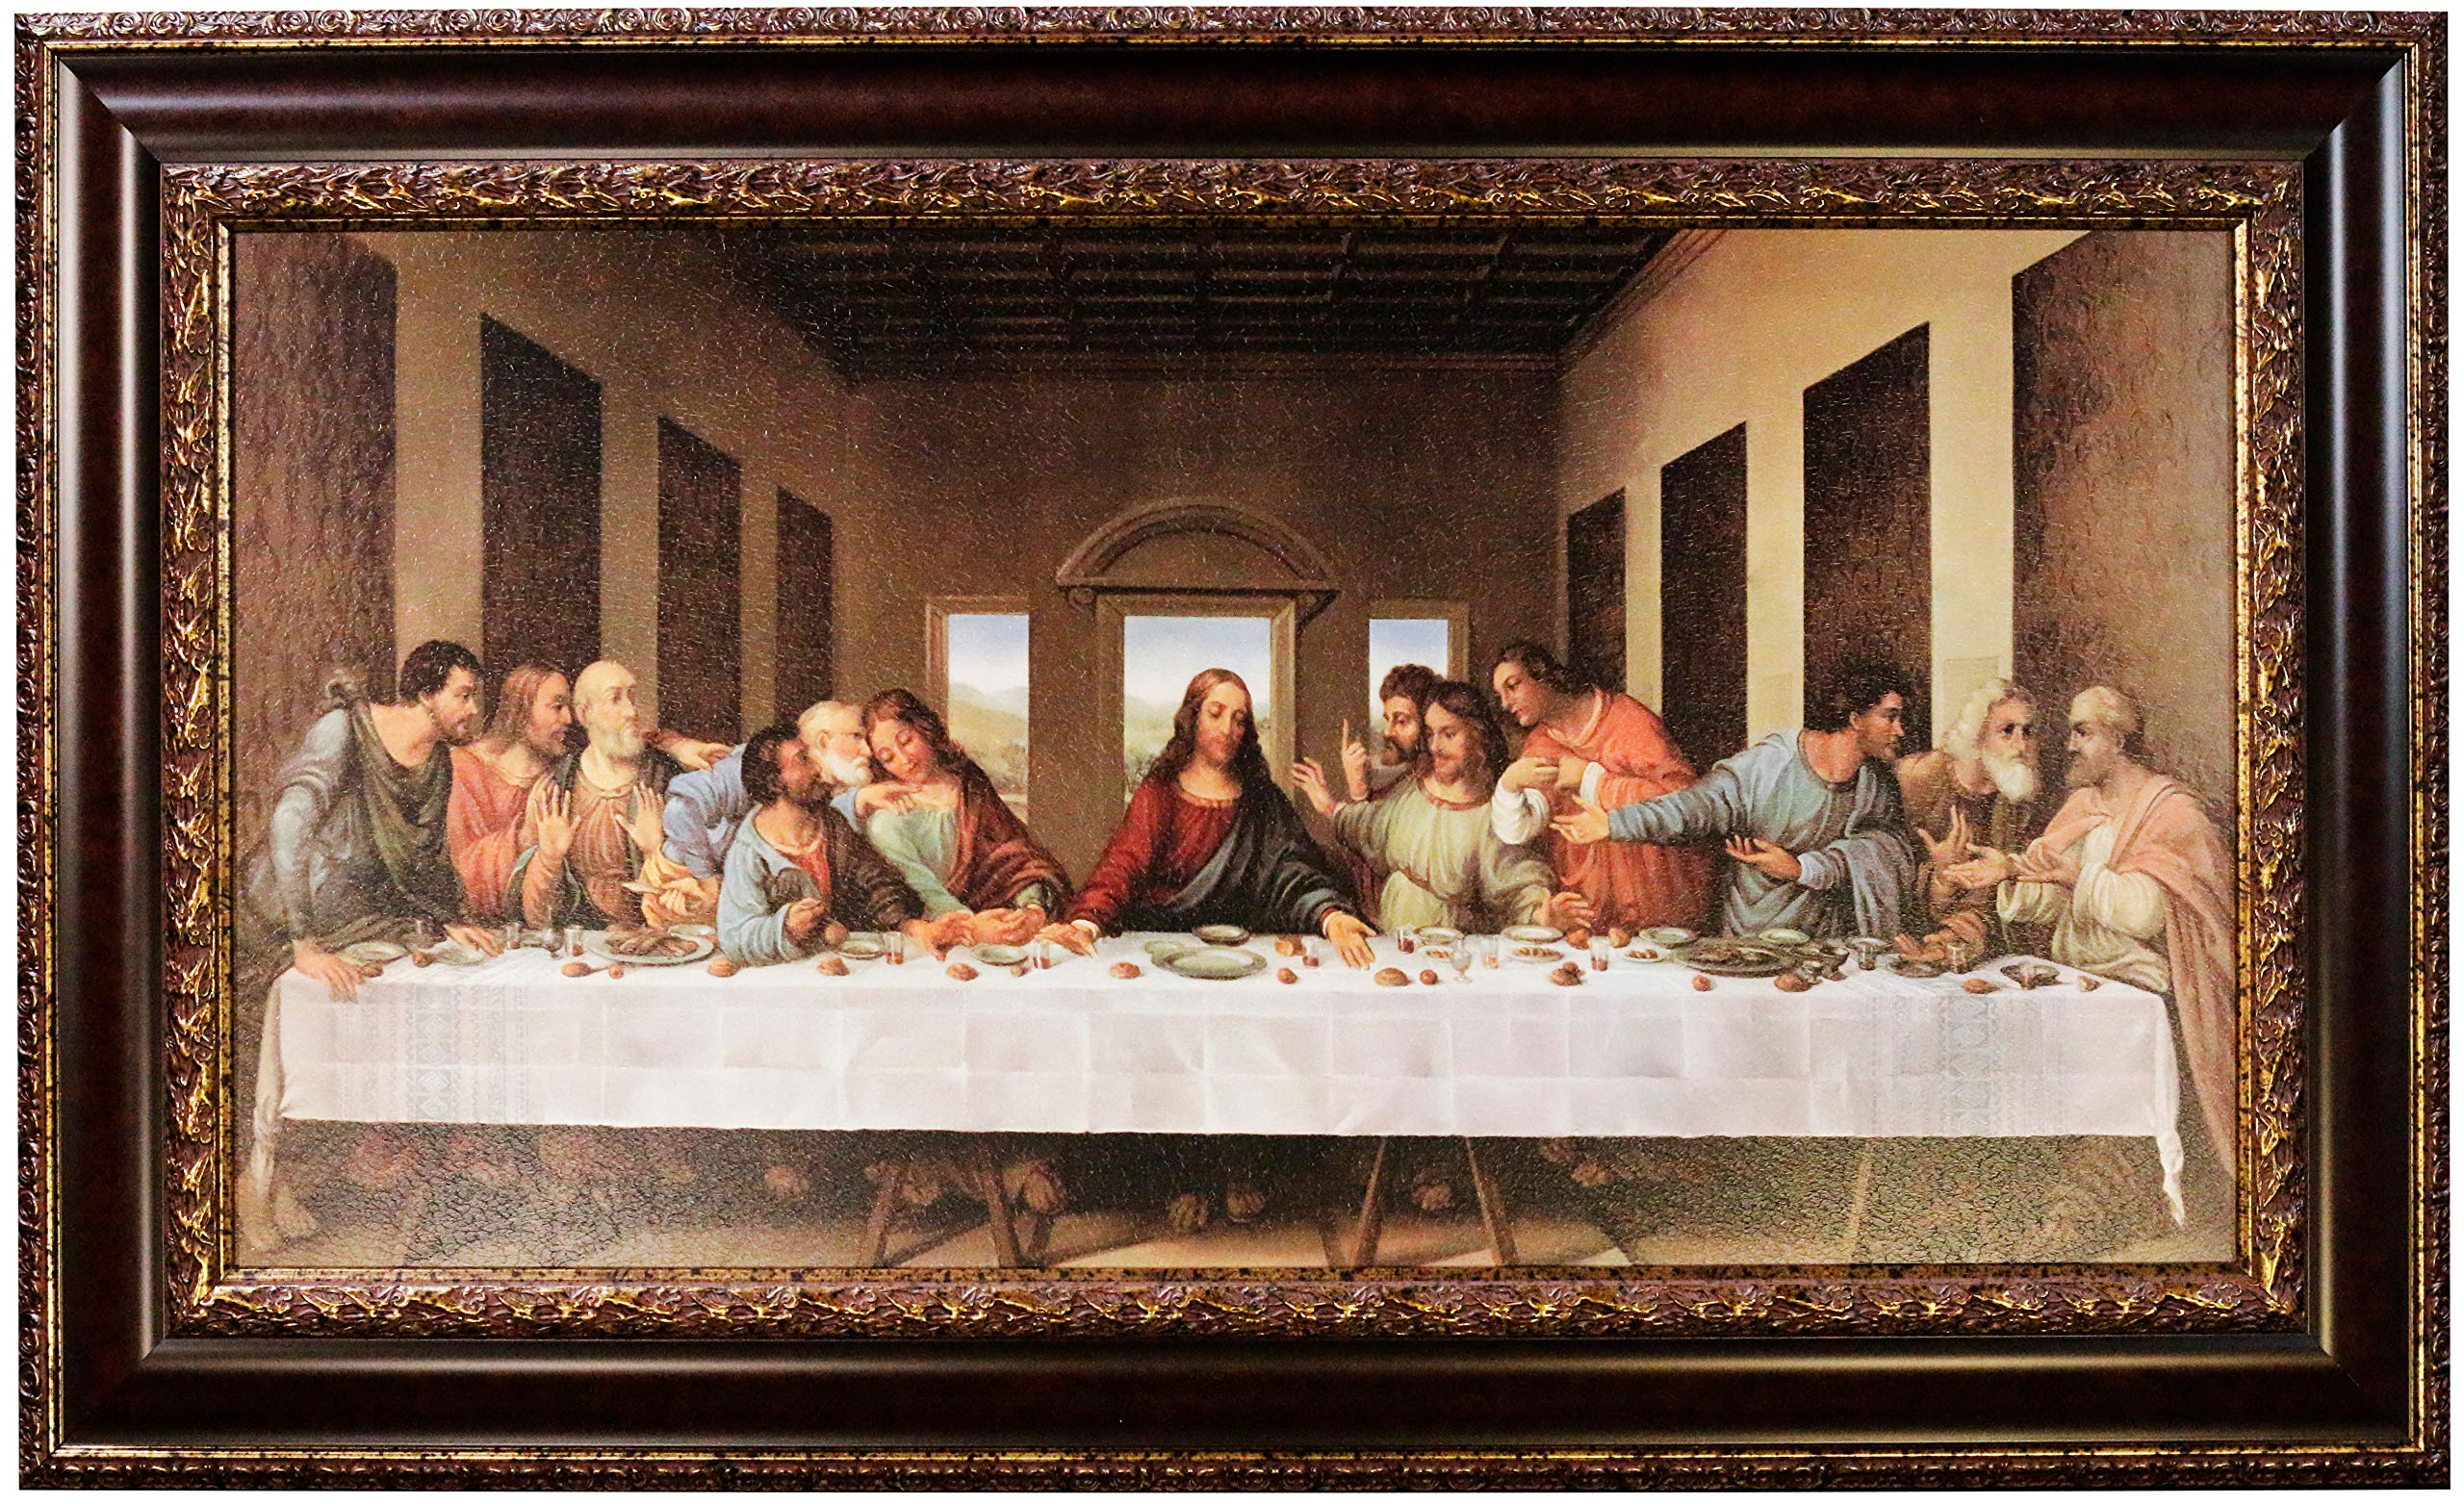 Mom’s Art Studio - Last Supper Wall Decor 46.5 X 28 Inches, Leonardo Da Vinci Reproductions, Museum Look Art Framed, Artist’s Acrylic Coating, Wall...